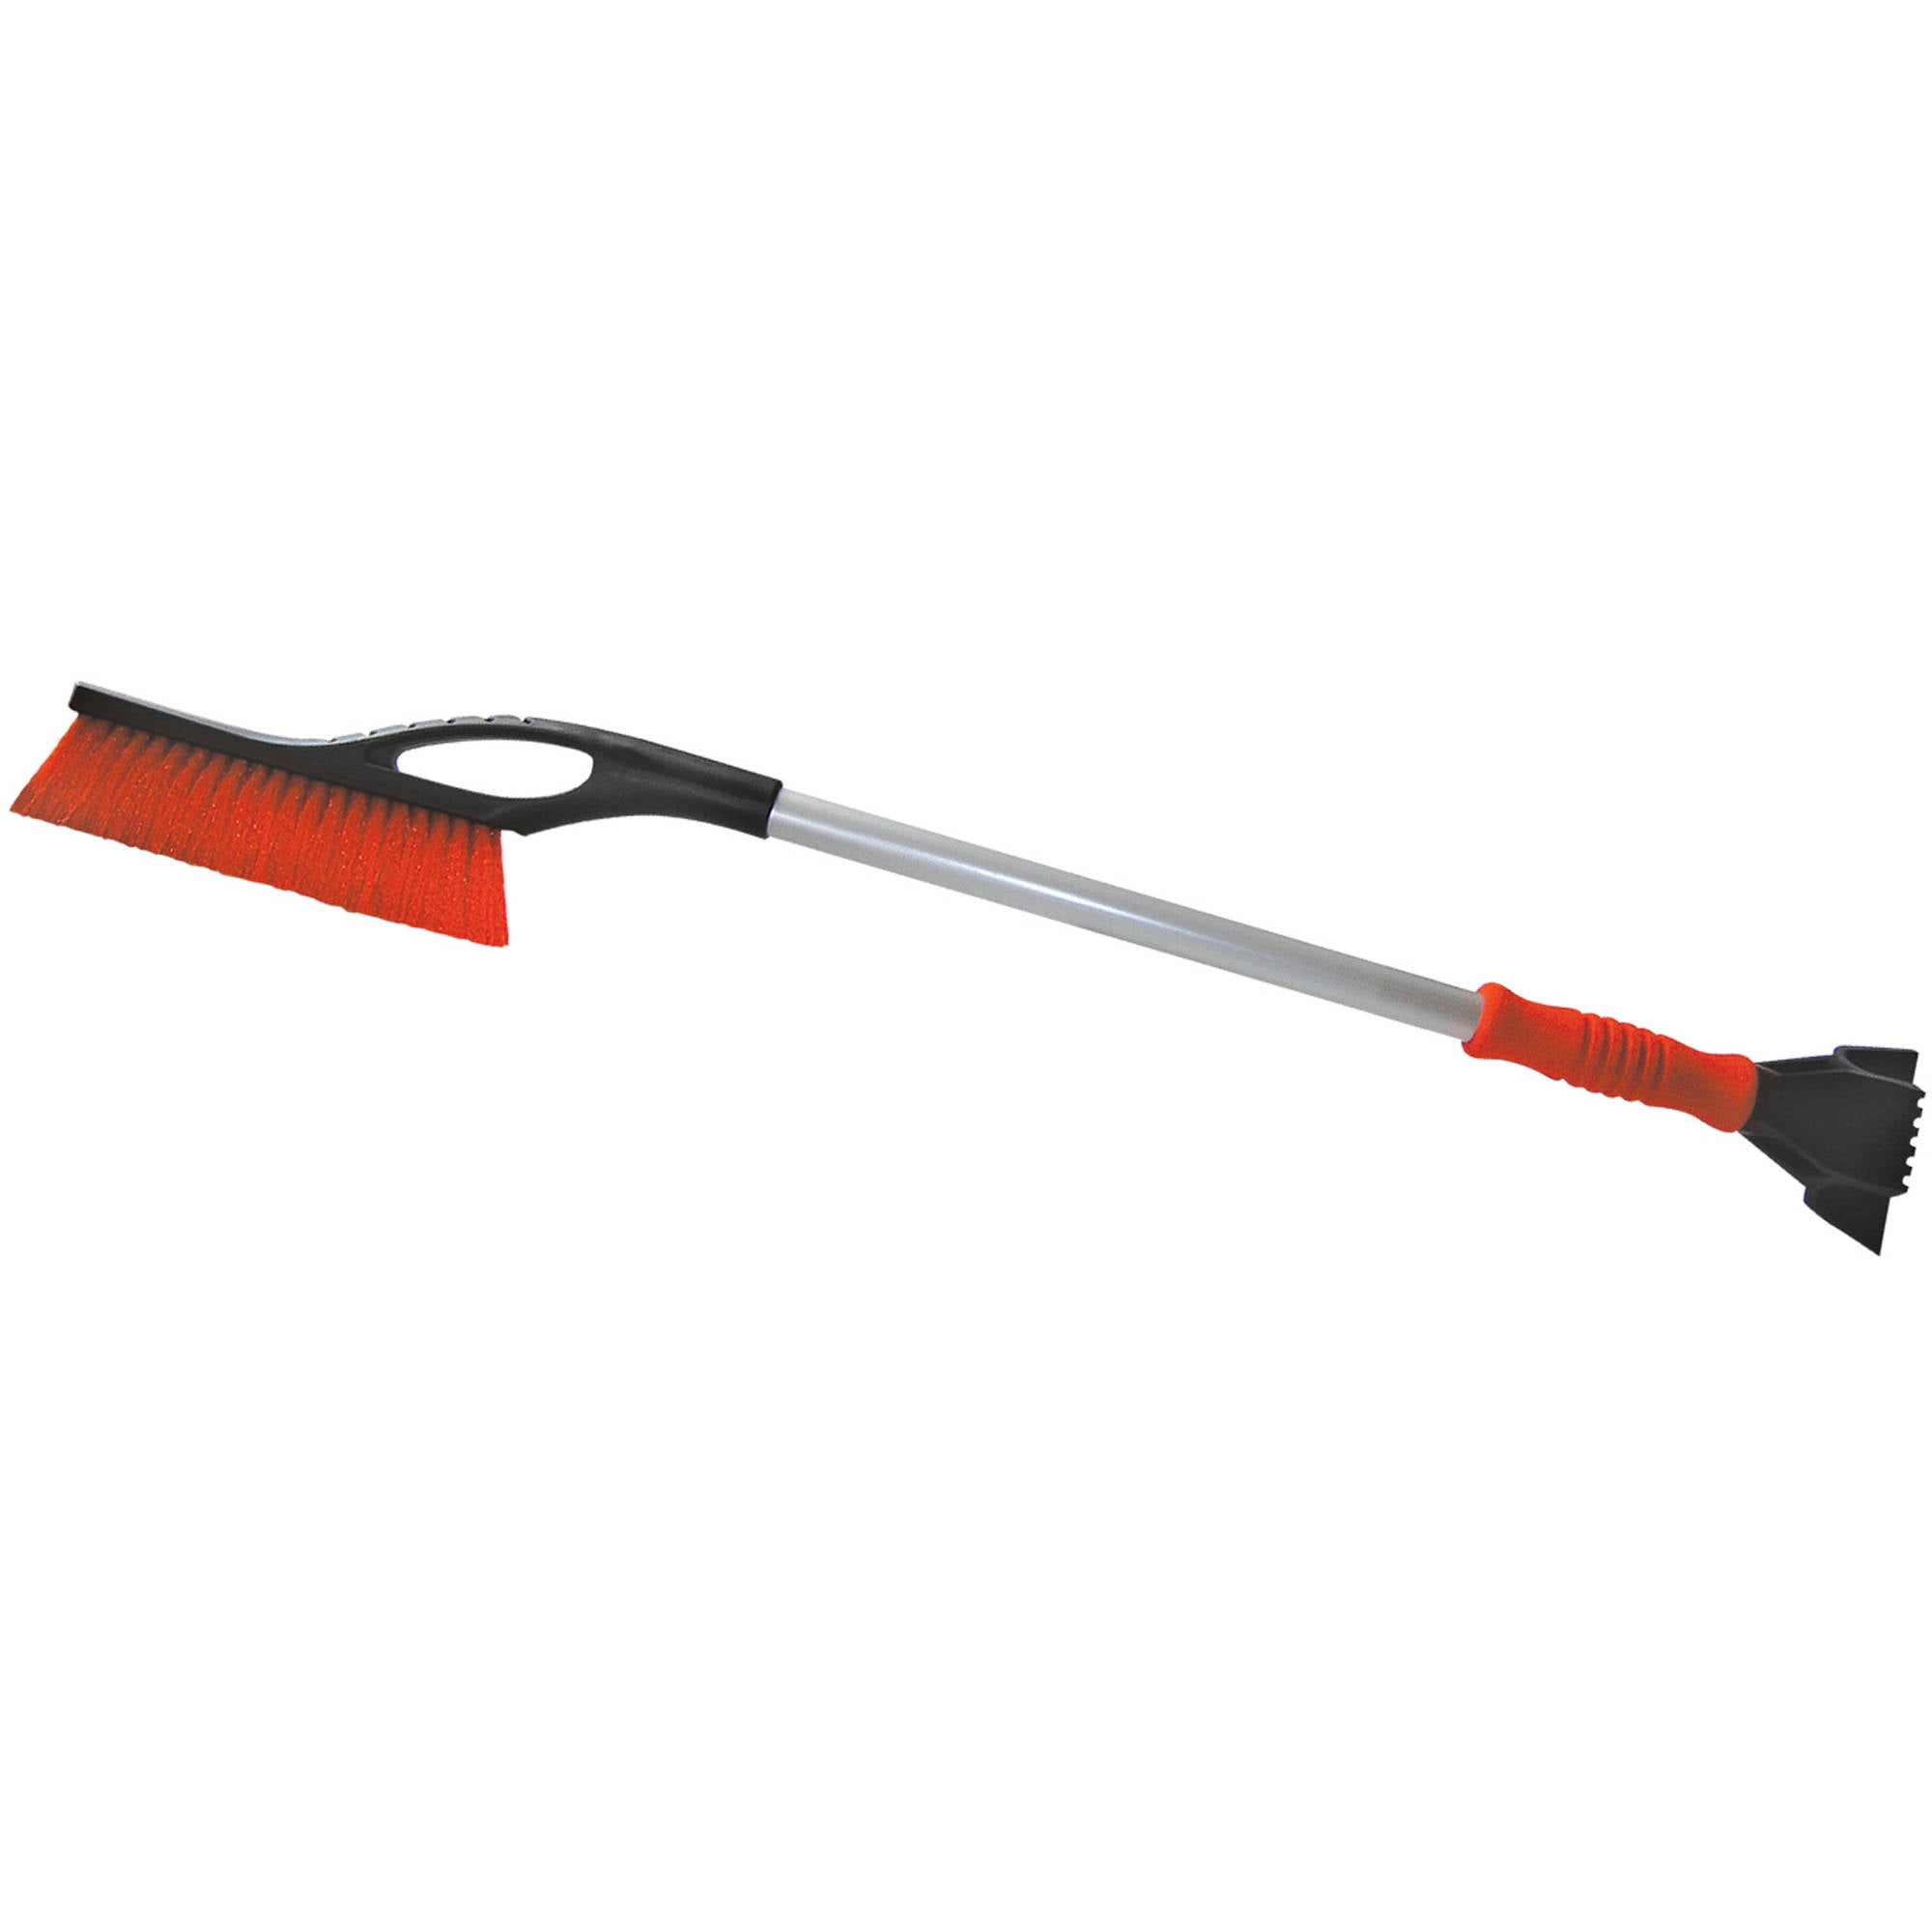 Talon Tools Expandable 5 in 1 Snow Removal Tool Kit Shovel Scraper Squeegee Brush Heavy Duty Aluminum Black